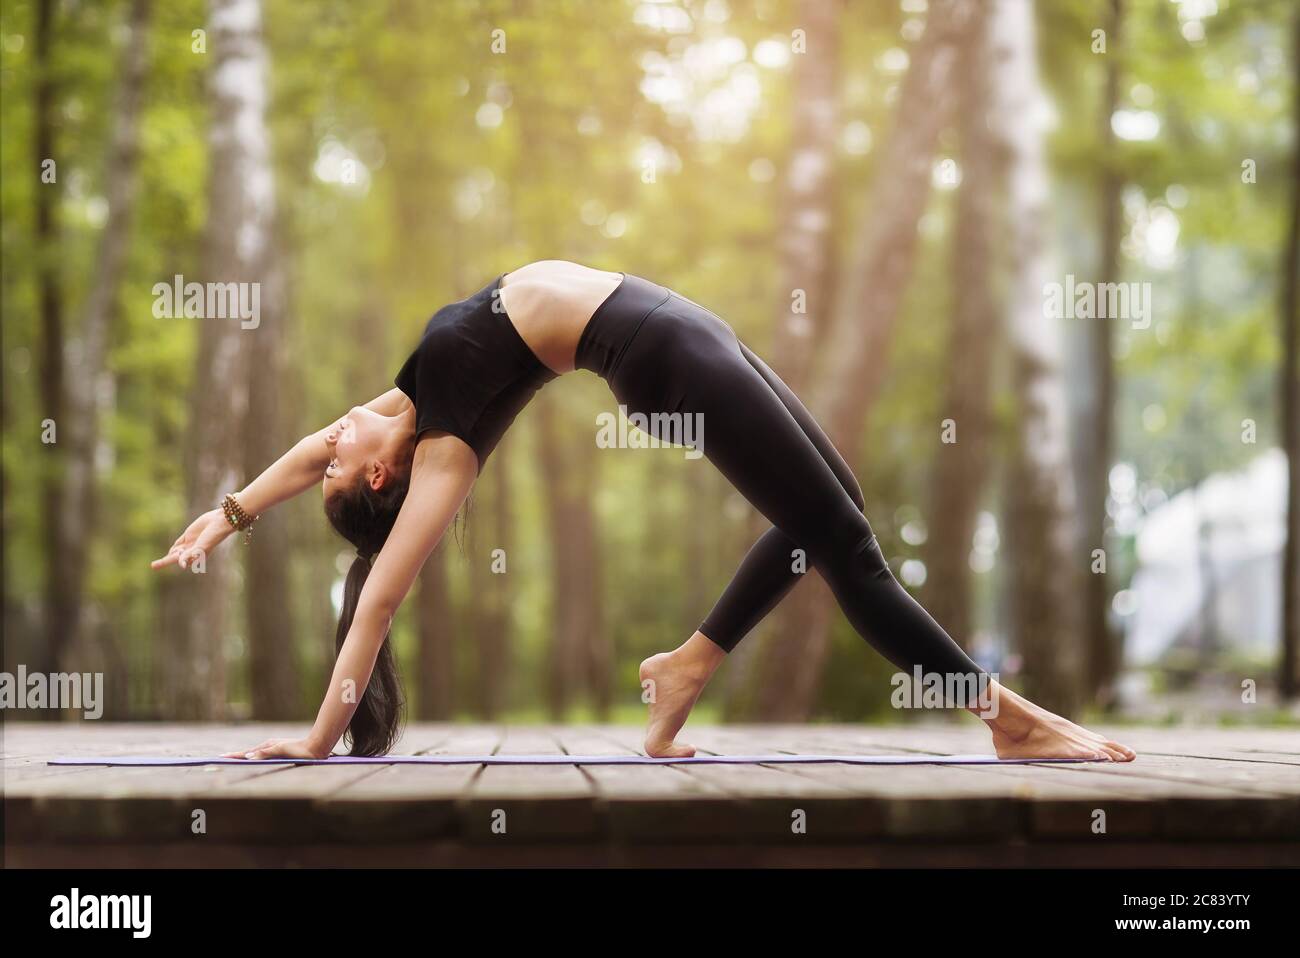 265 Partner Yoga Challenge Images, Stock Photos, 3D objects, & Vectors |  Shutterstock